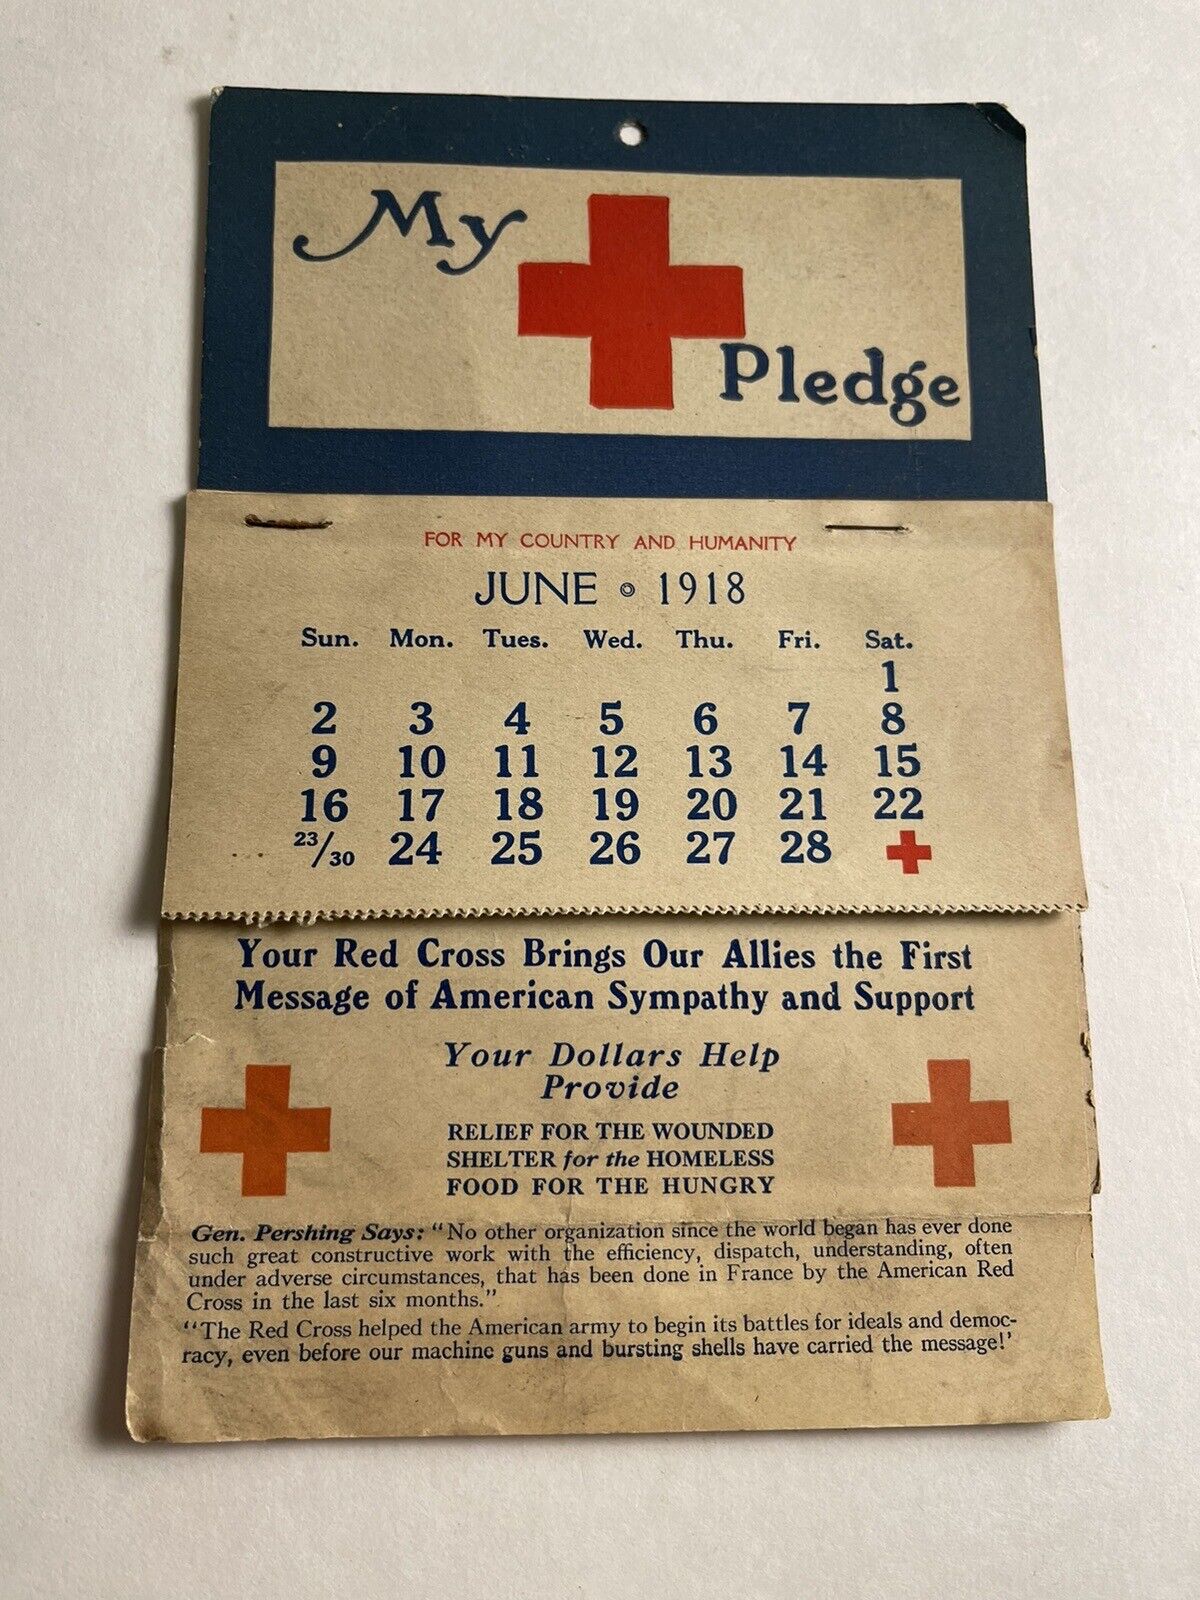 My Red Cross Pledge Calendar Coupon Book 1918 WW1 Wartime